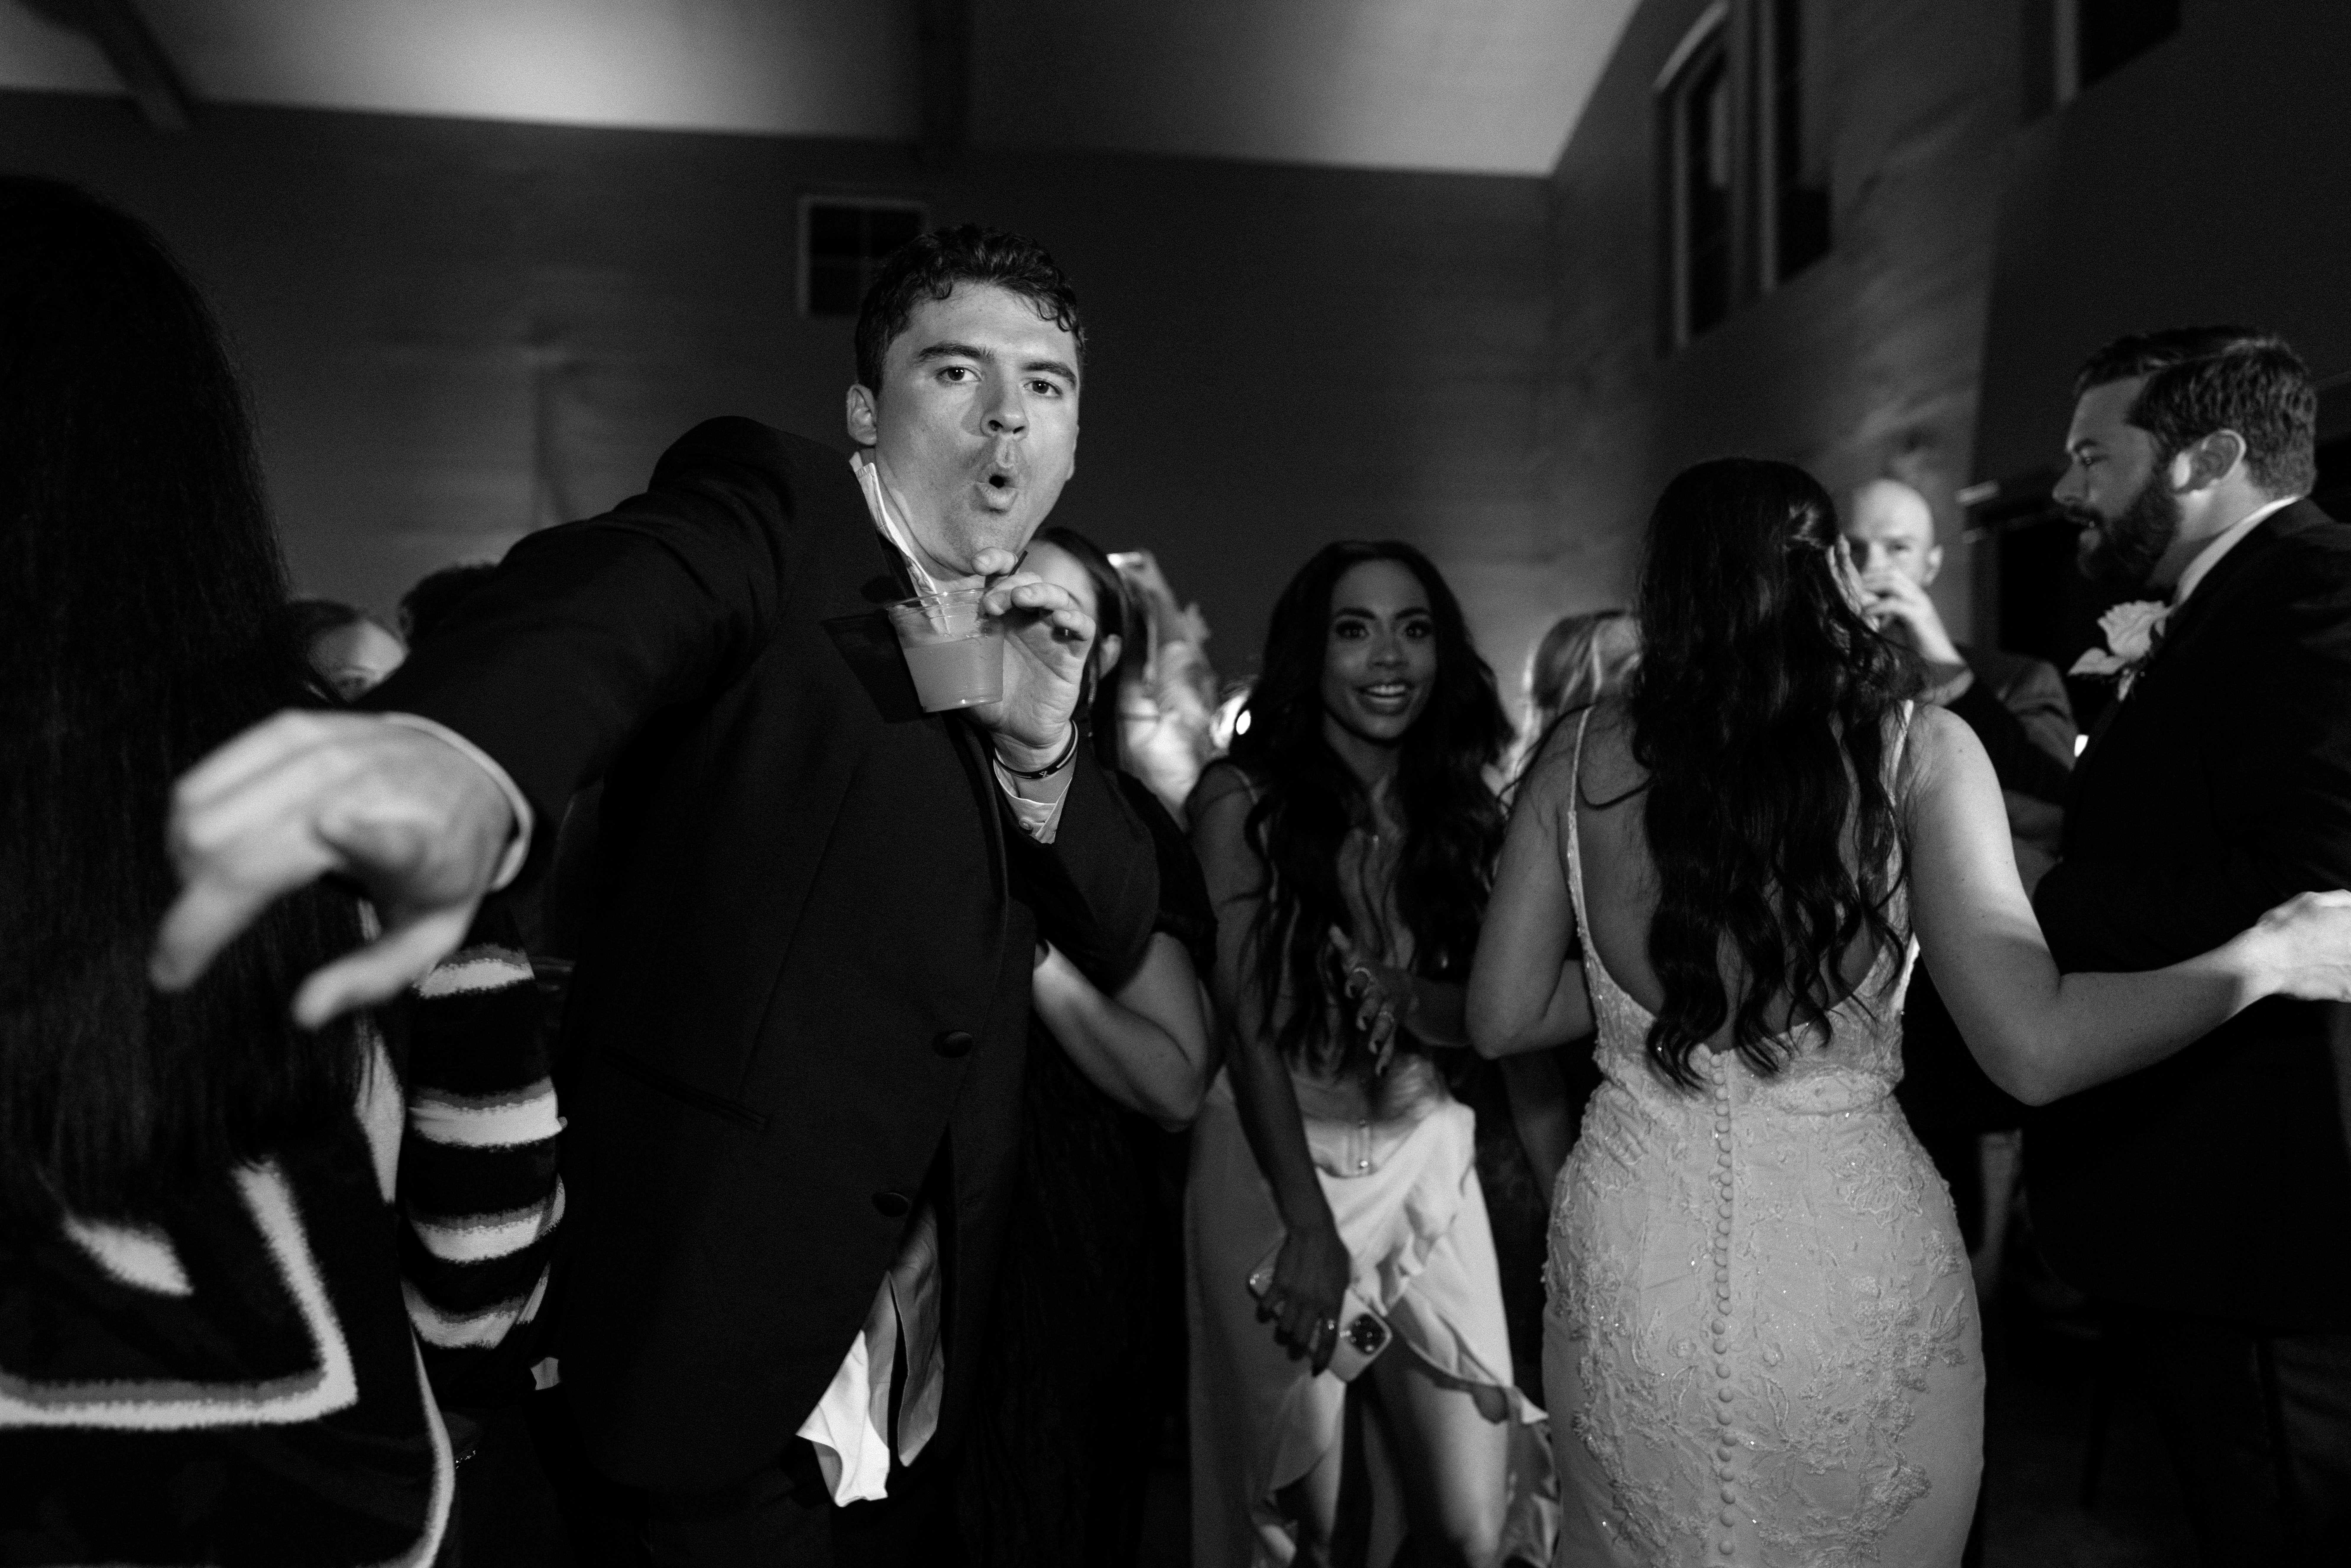 Reign Hills Wedding reception| Courtney LaSalle Photography